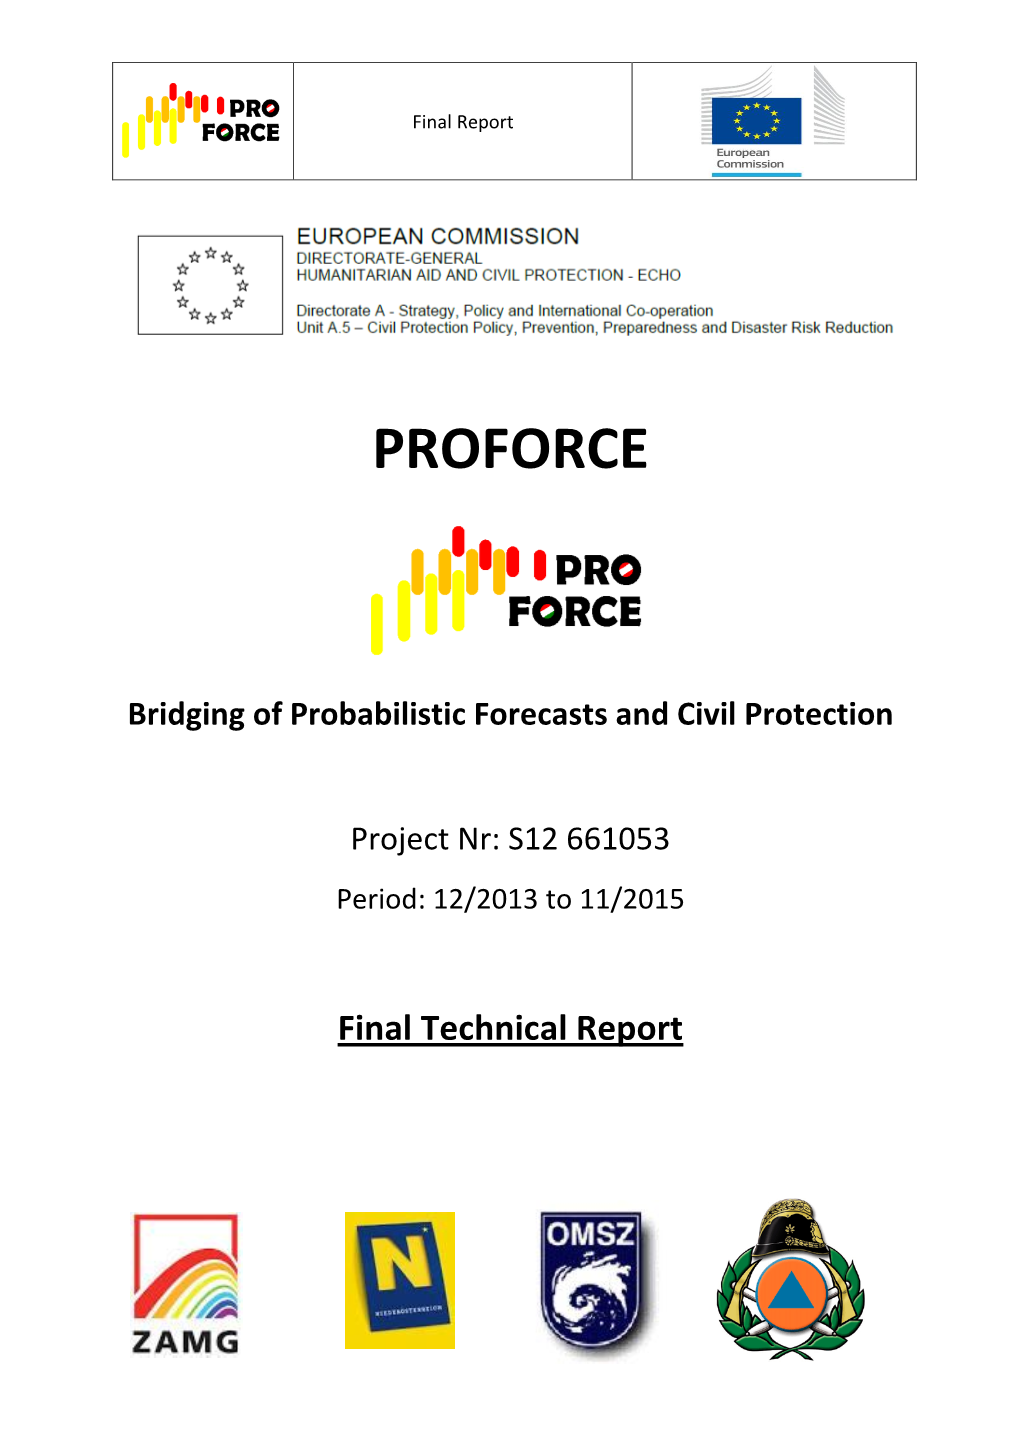 S12 661053, PROFORCE, Bridging of Probabilistic Forecasts and Civil